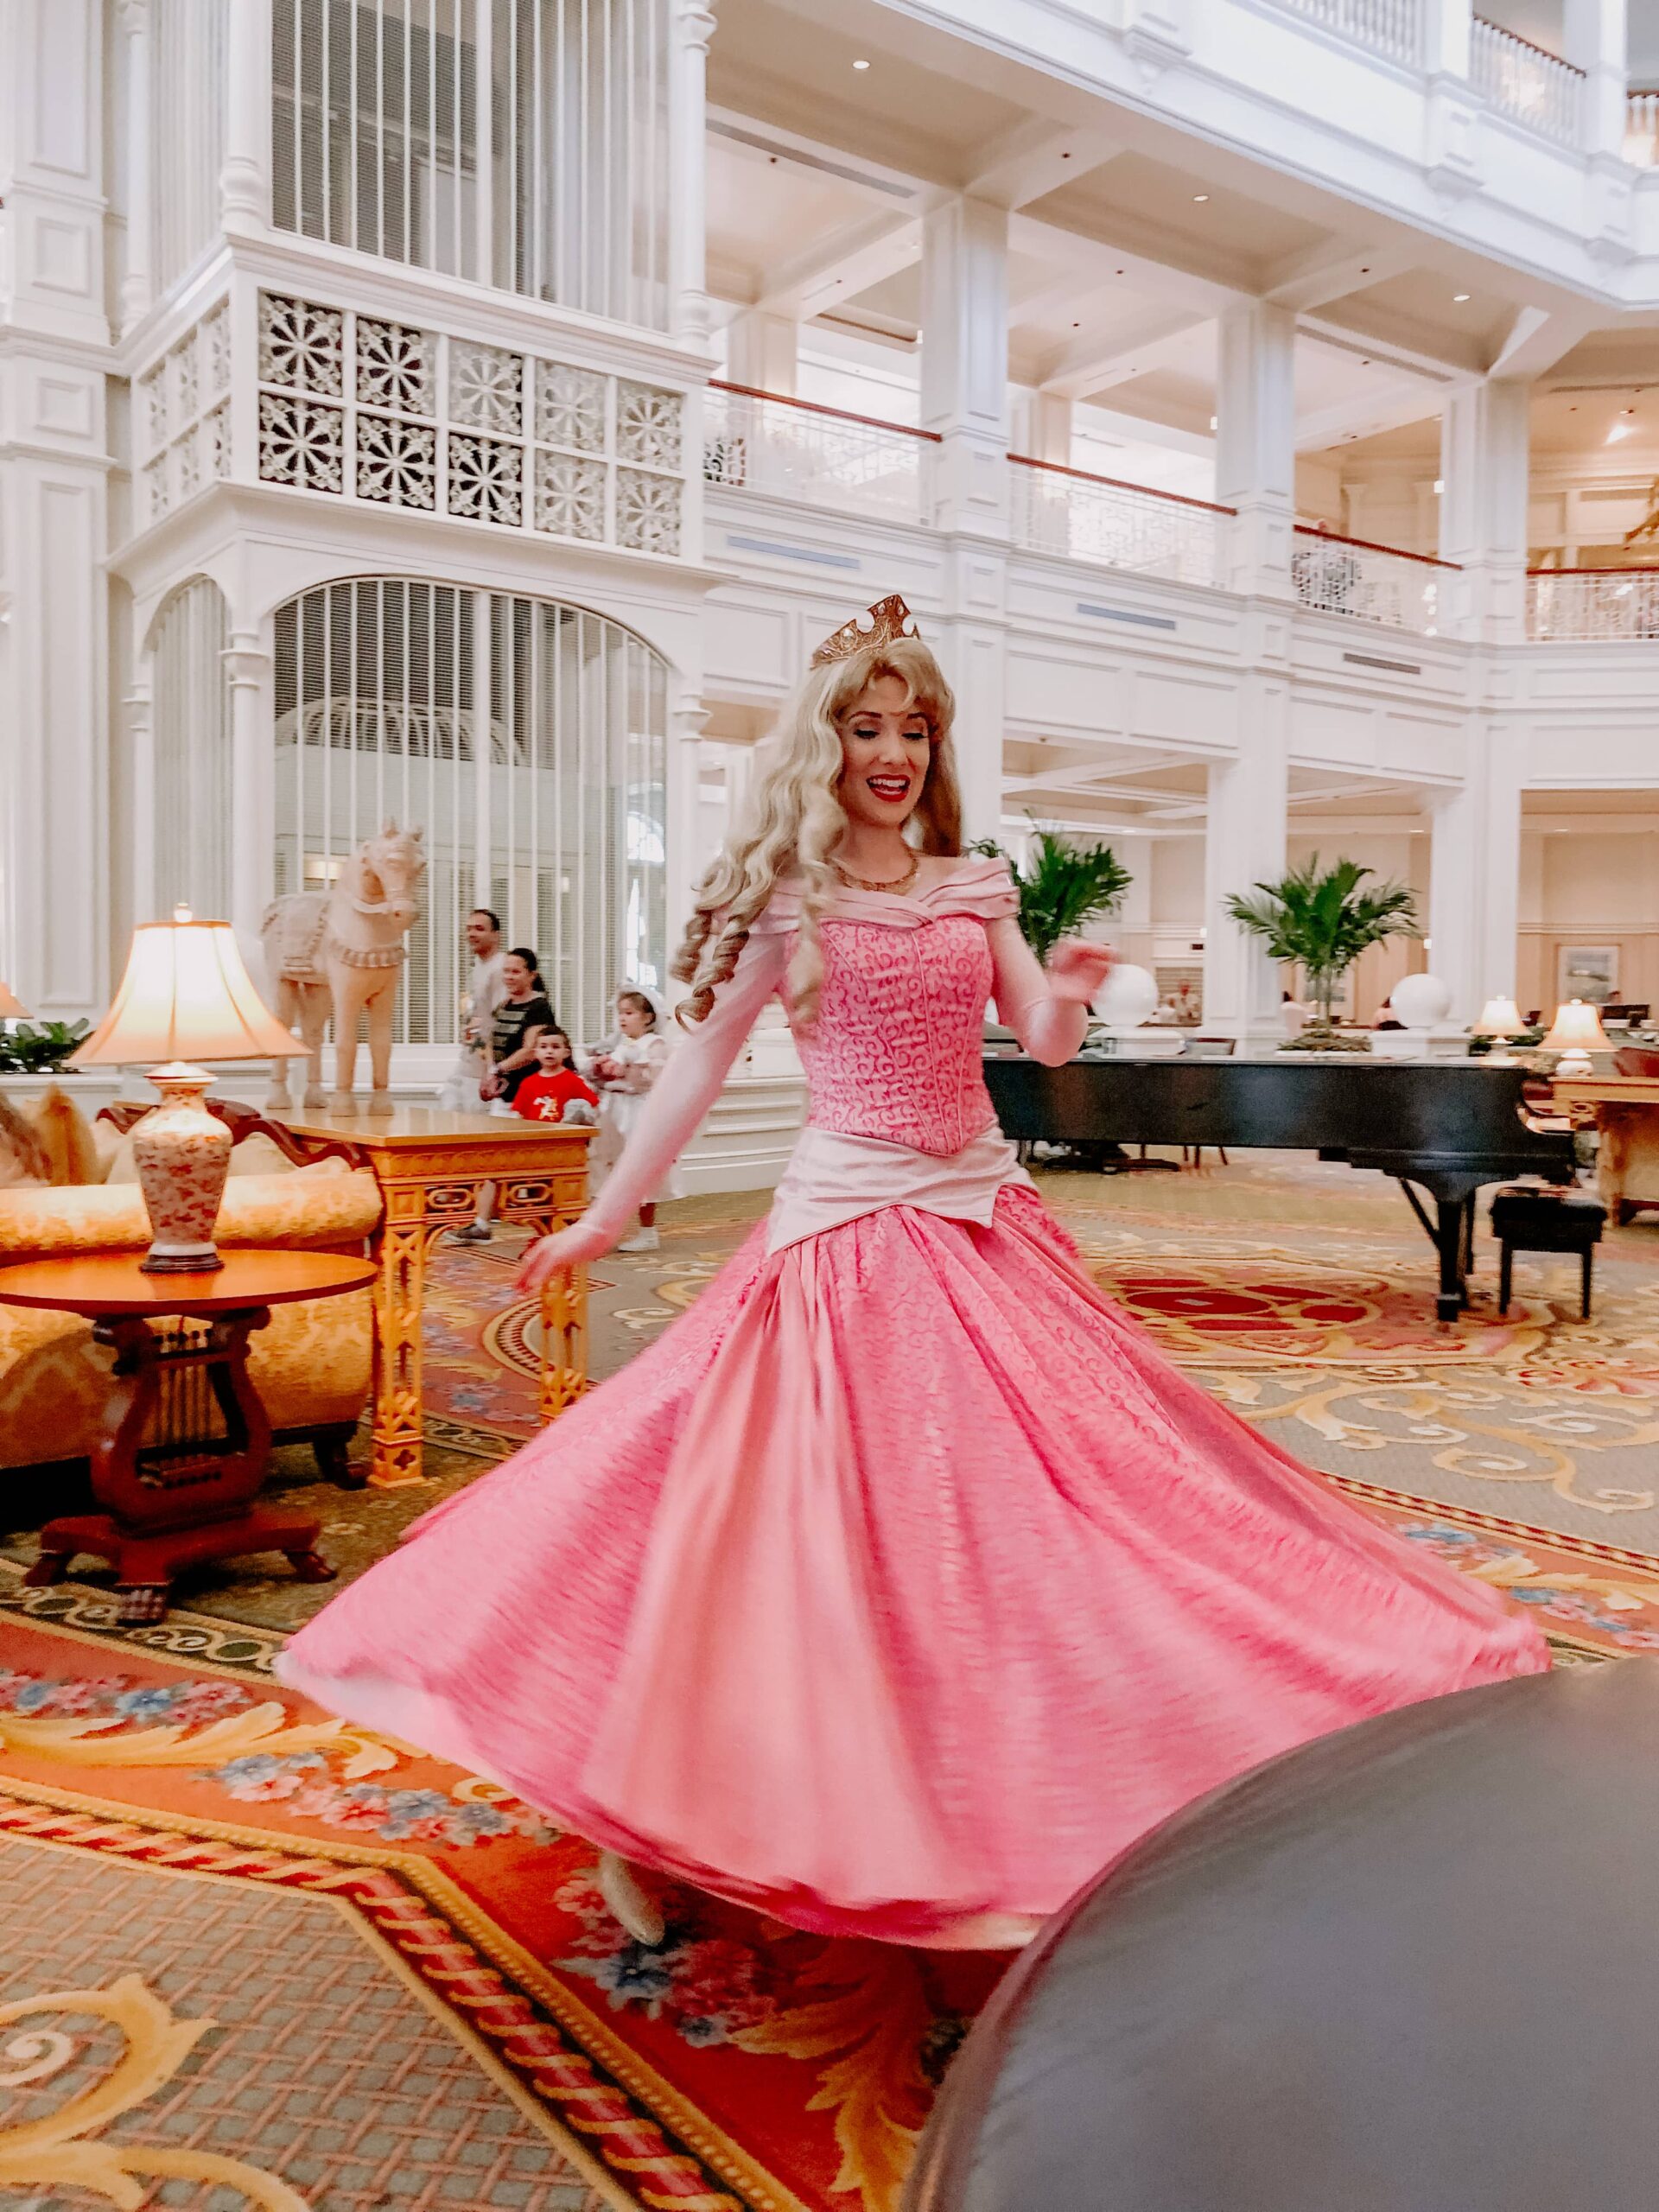 Find Disney Princesses: Walt Disney World Restaurants and Photo Spots